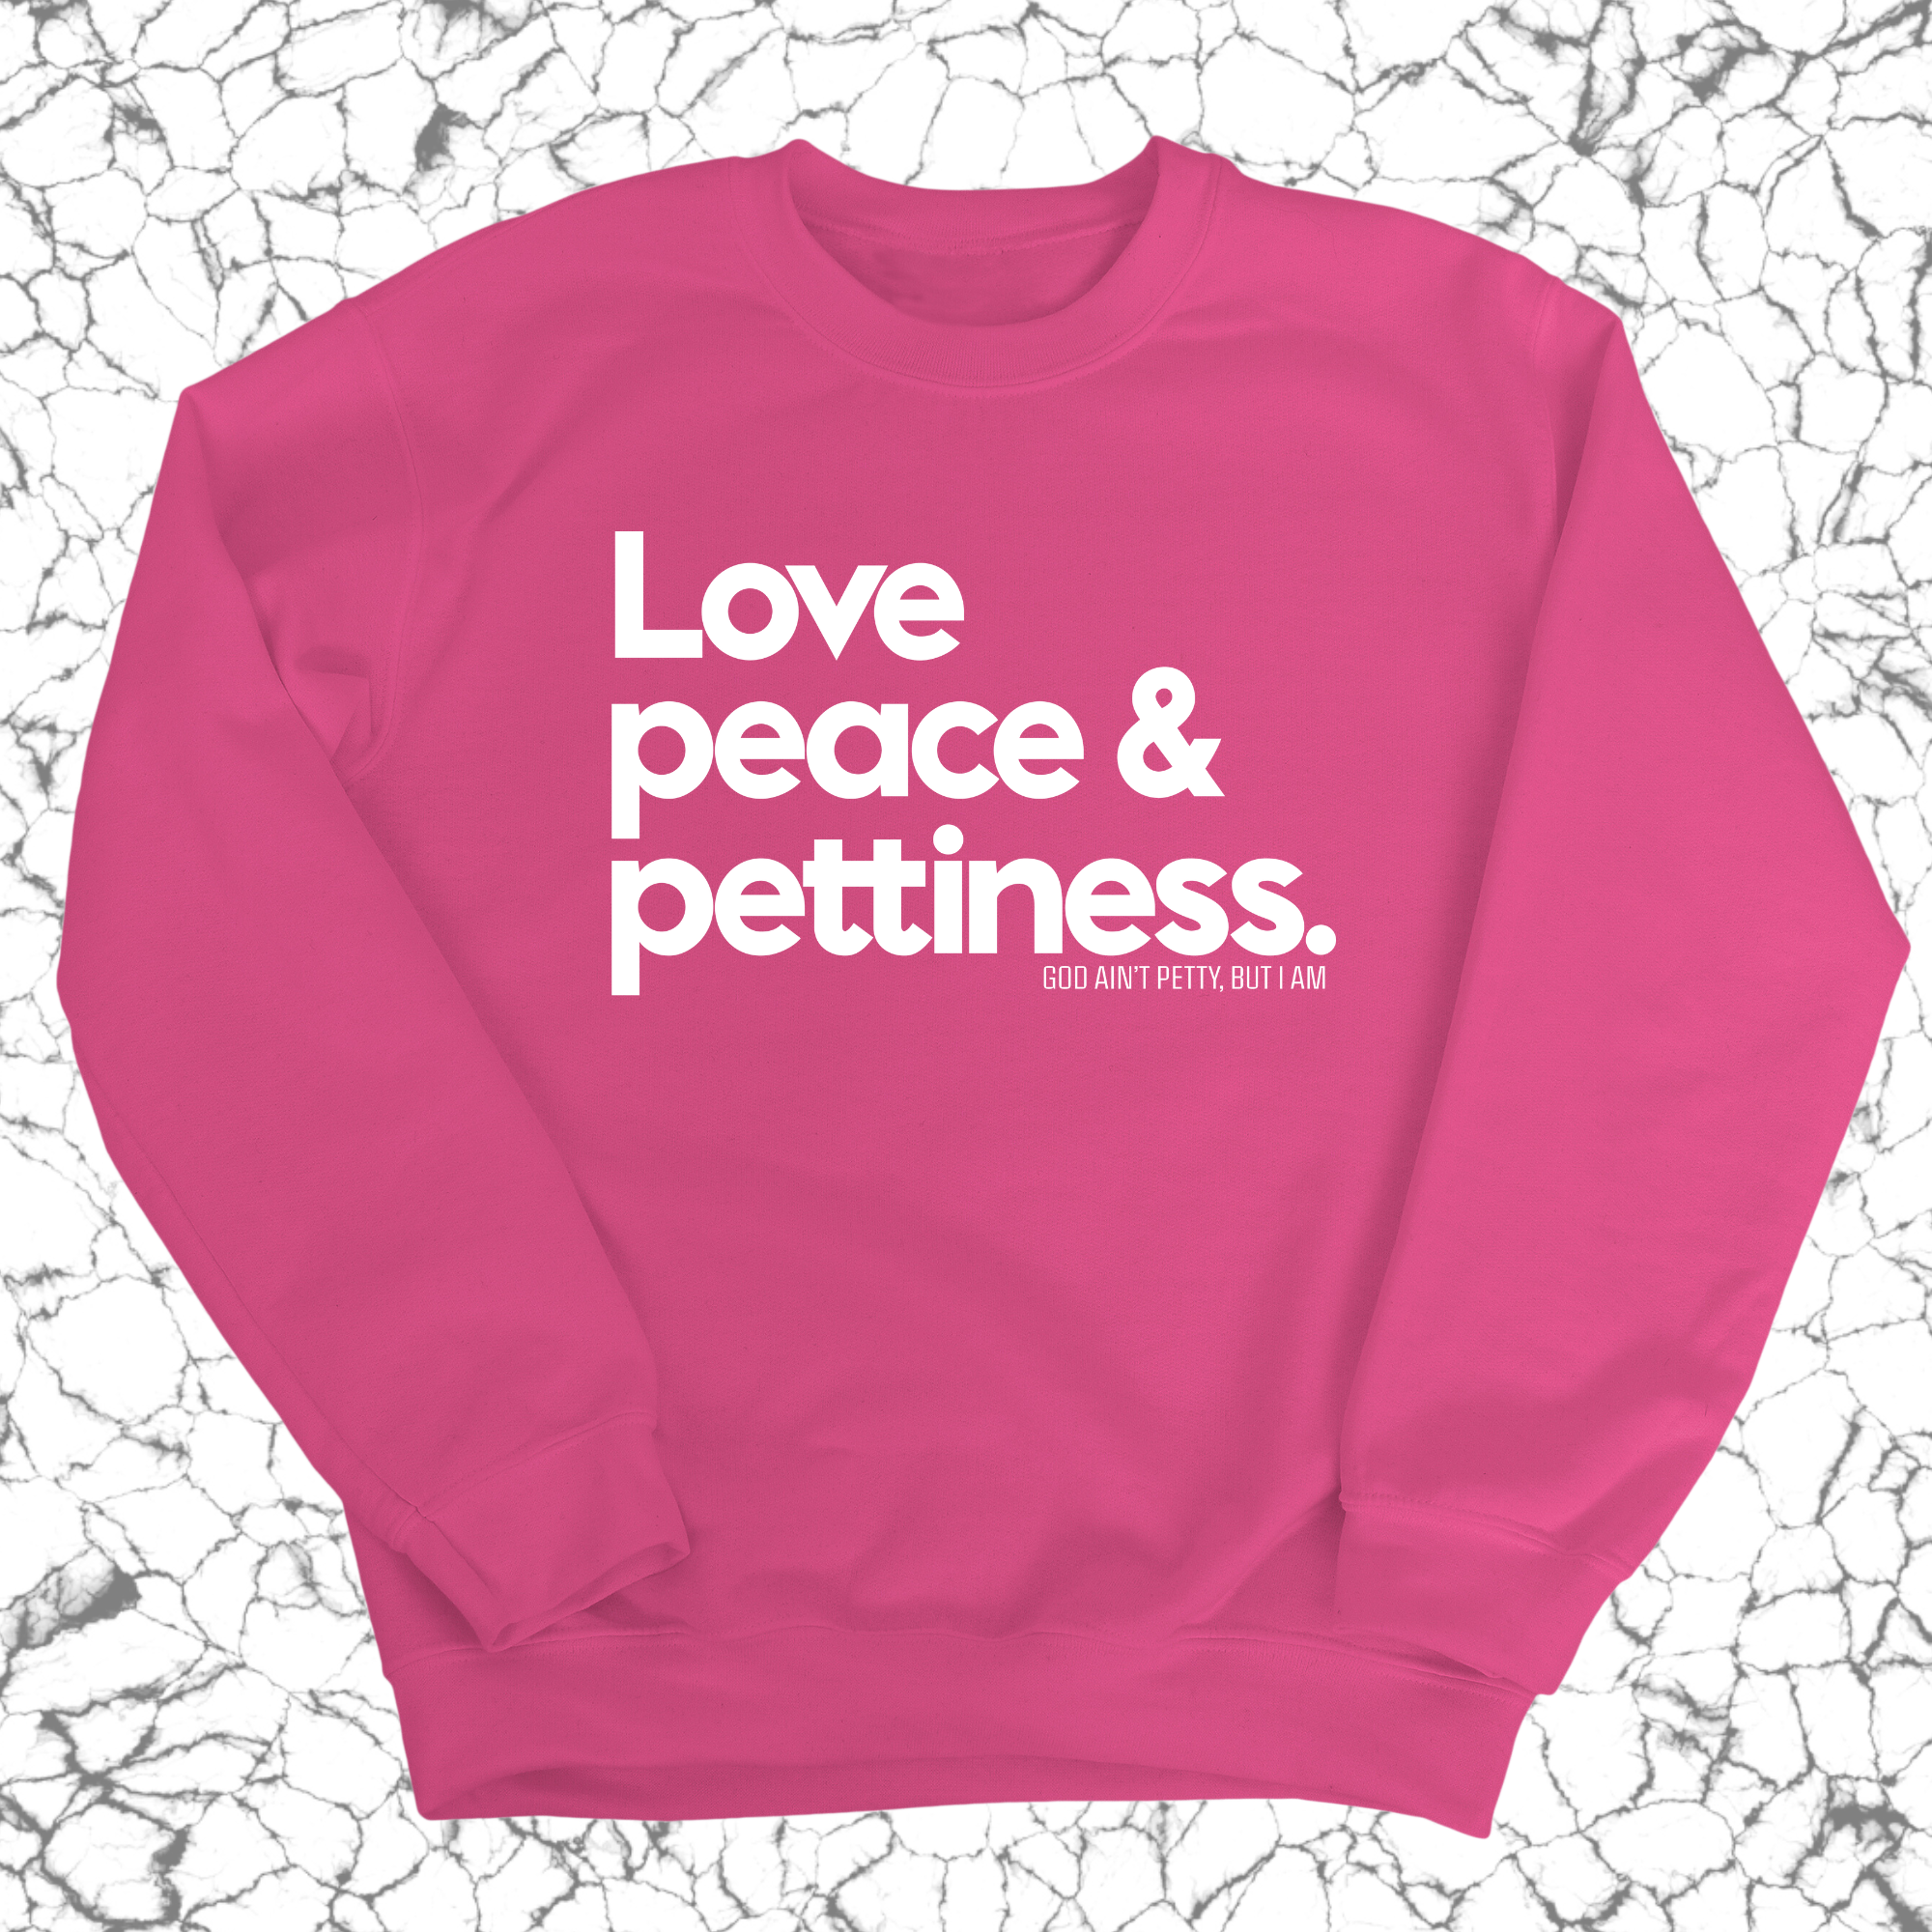 Love Peace & Pettiness Unisex Sweatshirt-Sweatshirt-The Original God Ain't Petty But I Am